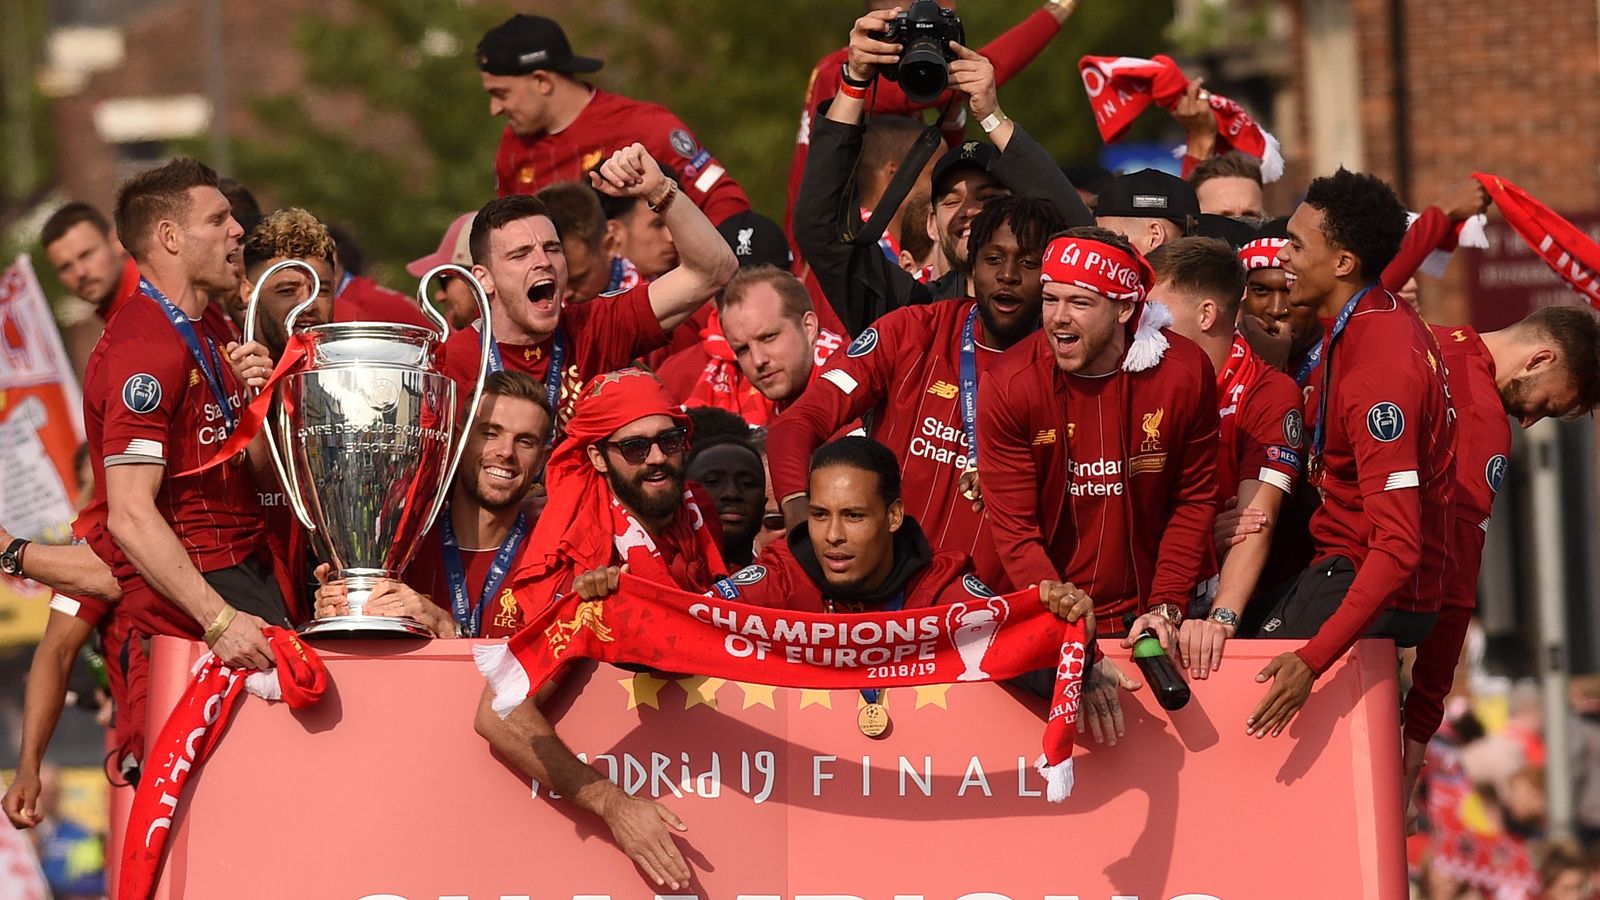 UEFA Champions League 2018-19 Winners Liverpool